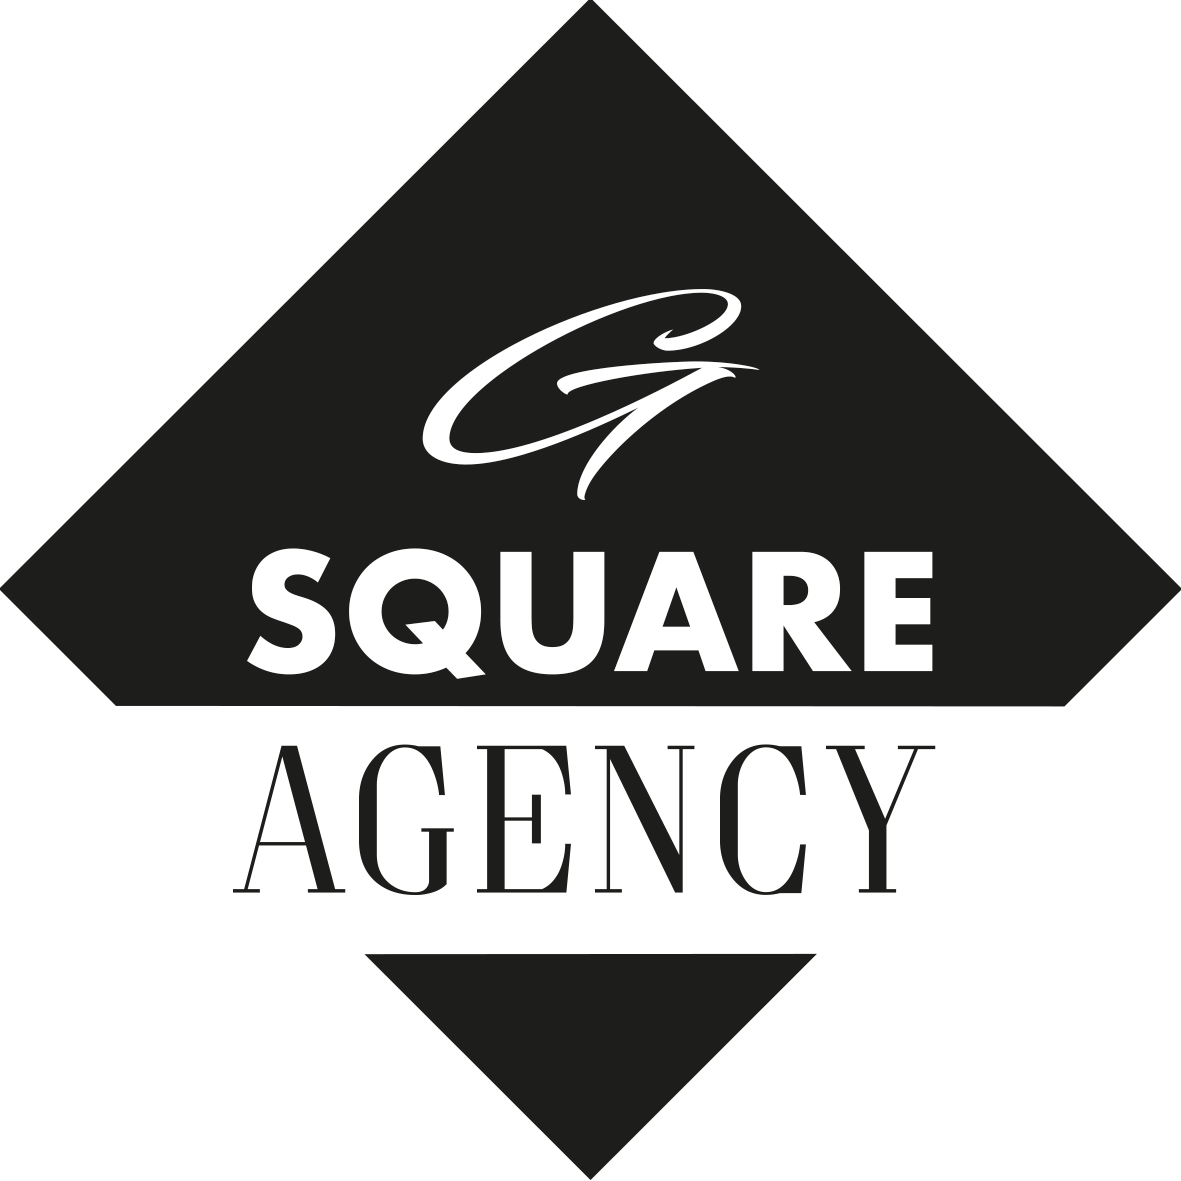 G-Square